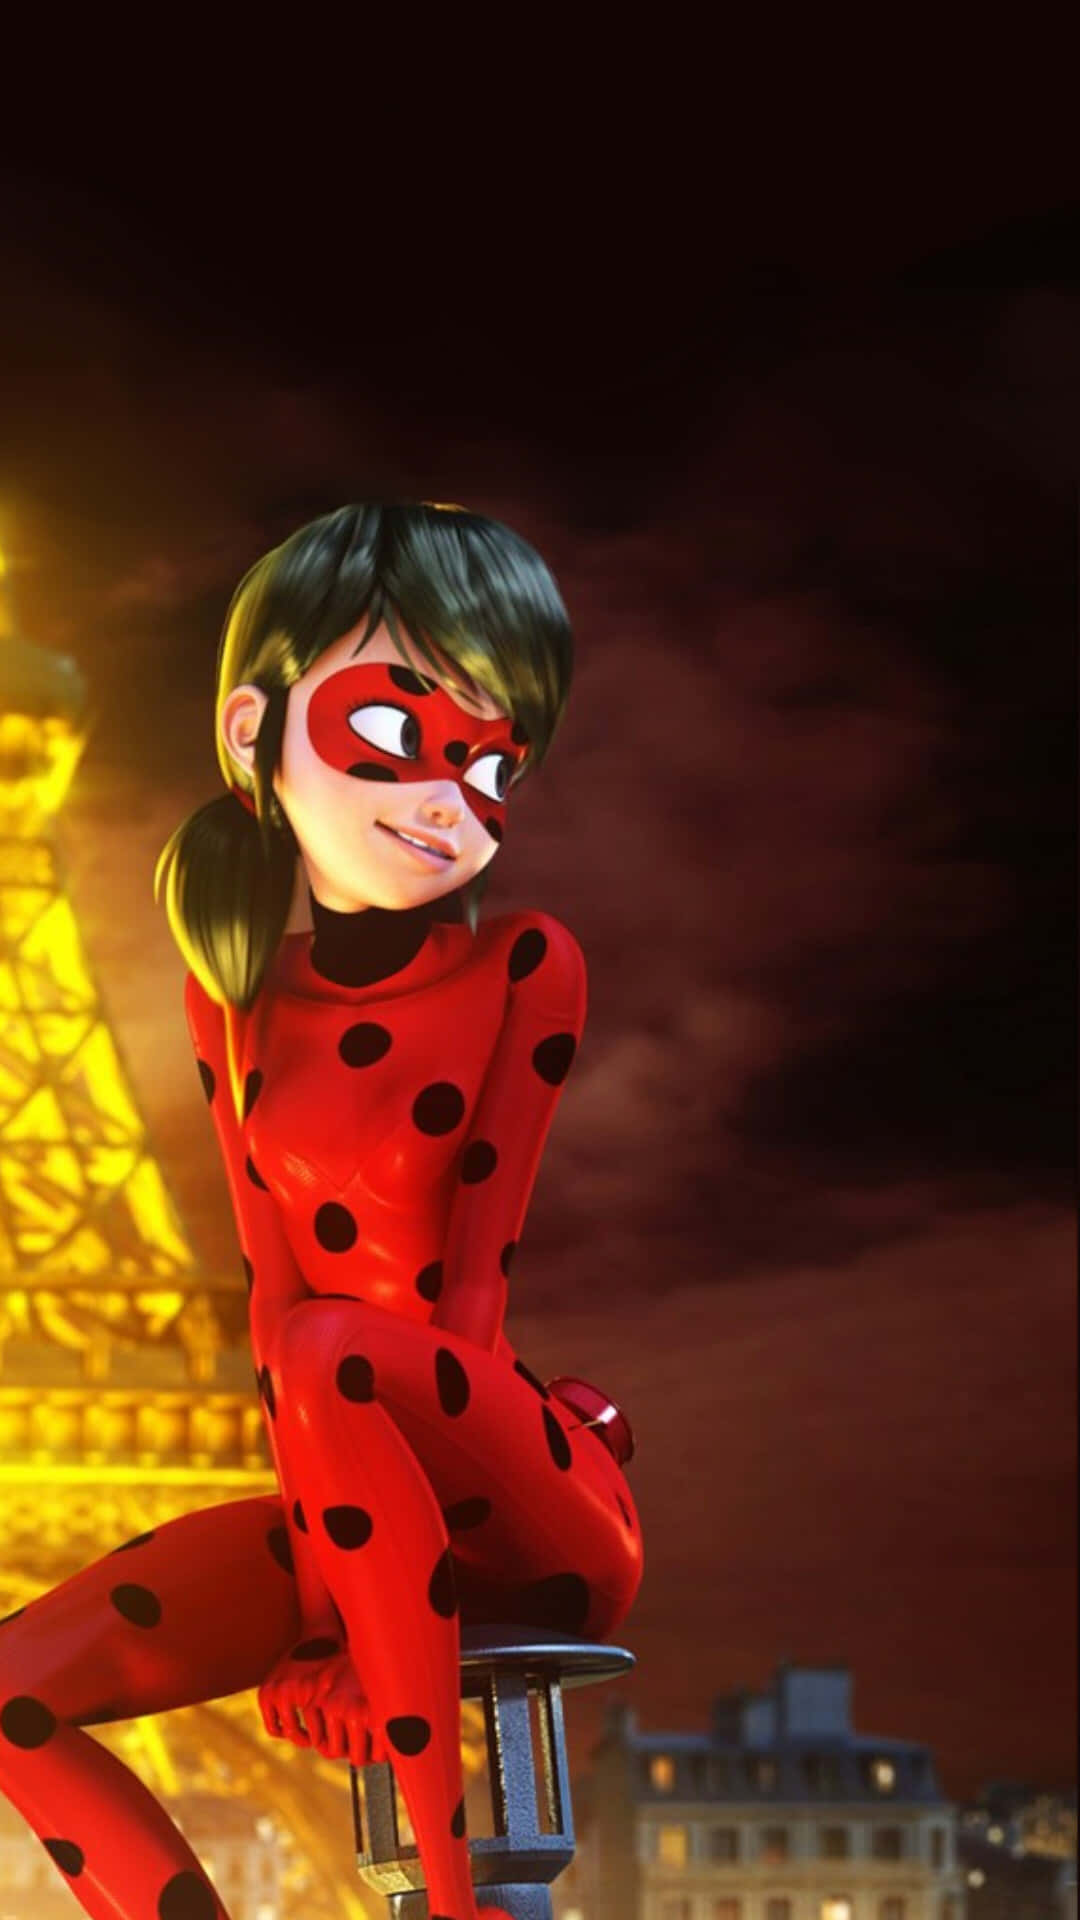 Follow Ladybug and Cat Noir as they protect Paris from akumatized villains!